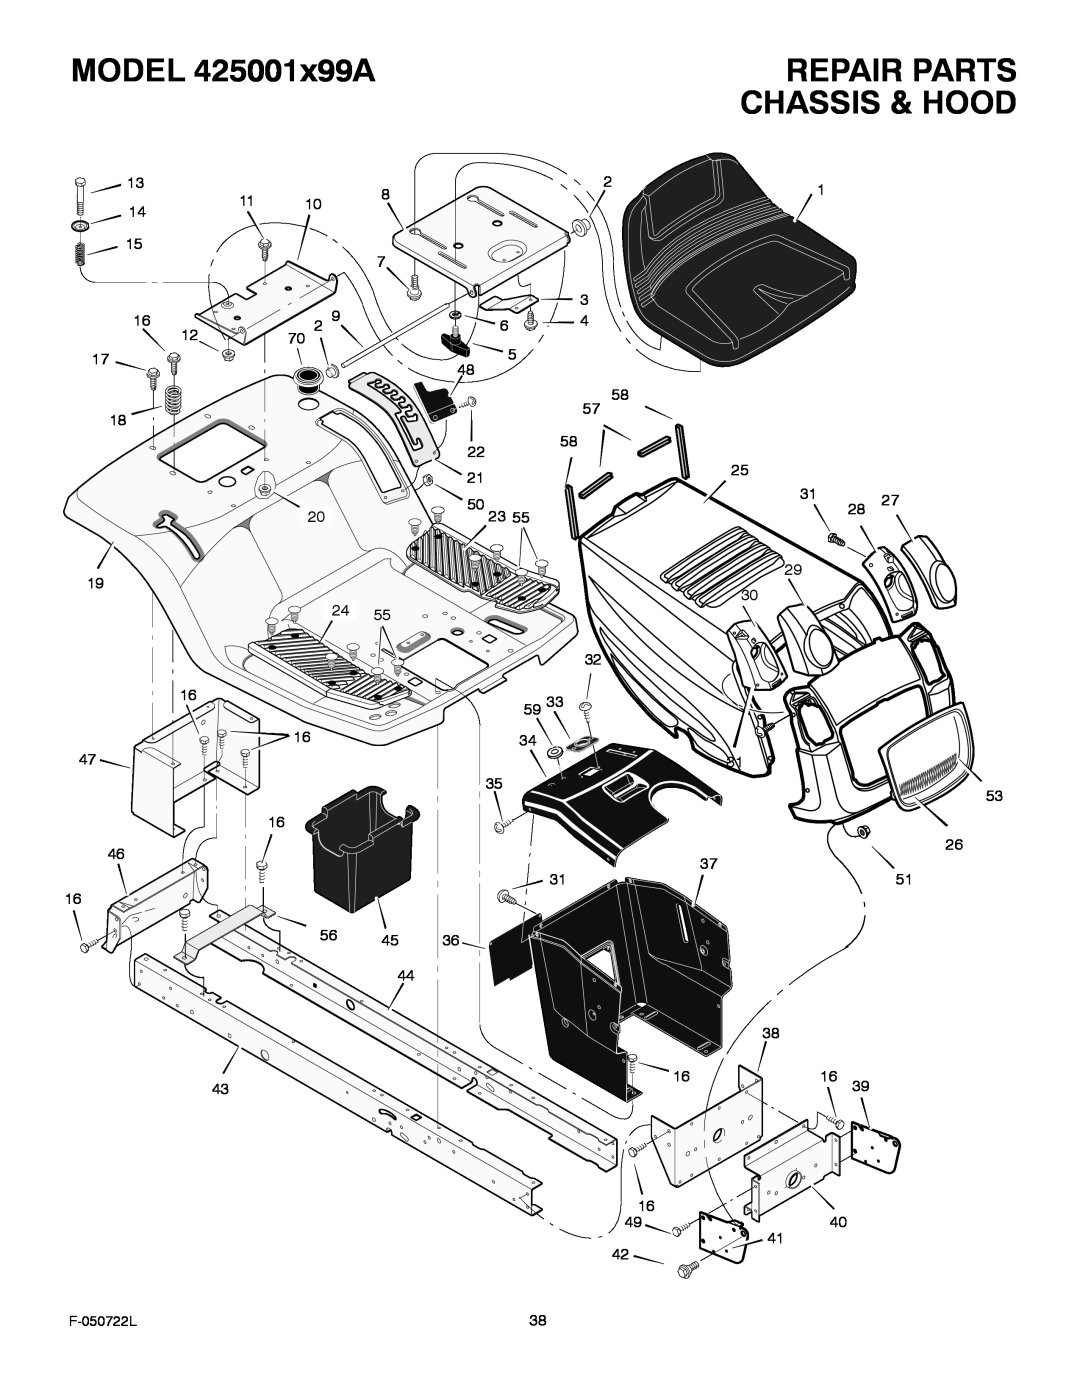 Murray manual MODEL 425001x99A, Repair Parts, Chassis & Hood, F-050722L 